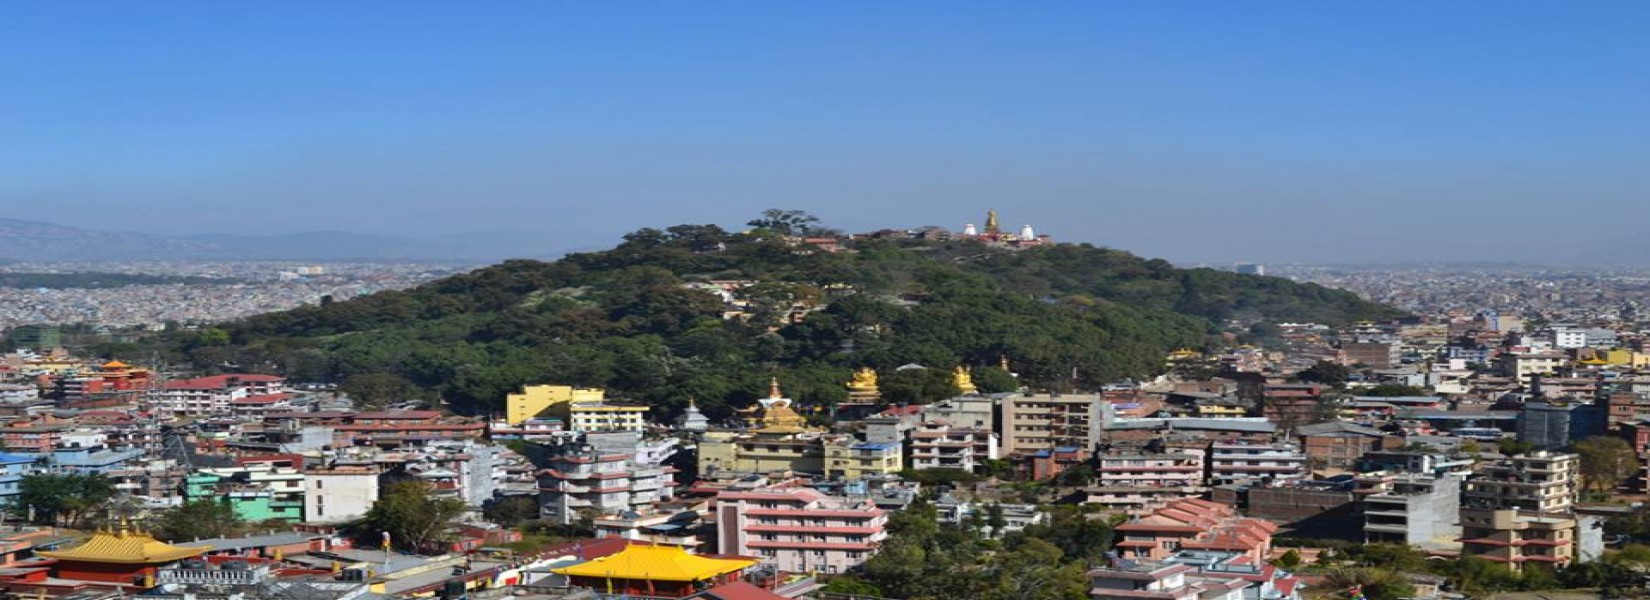 Kathmandu Sightseeing Tour of UNESCO World Heritage Sites